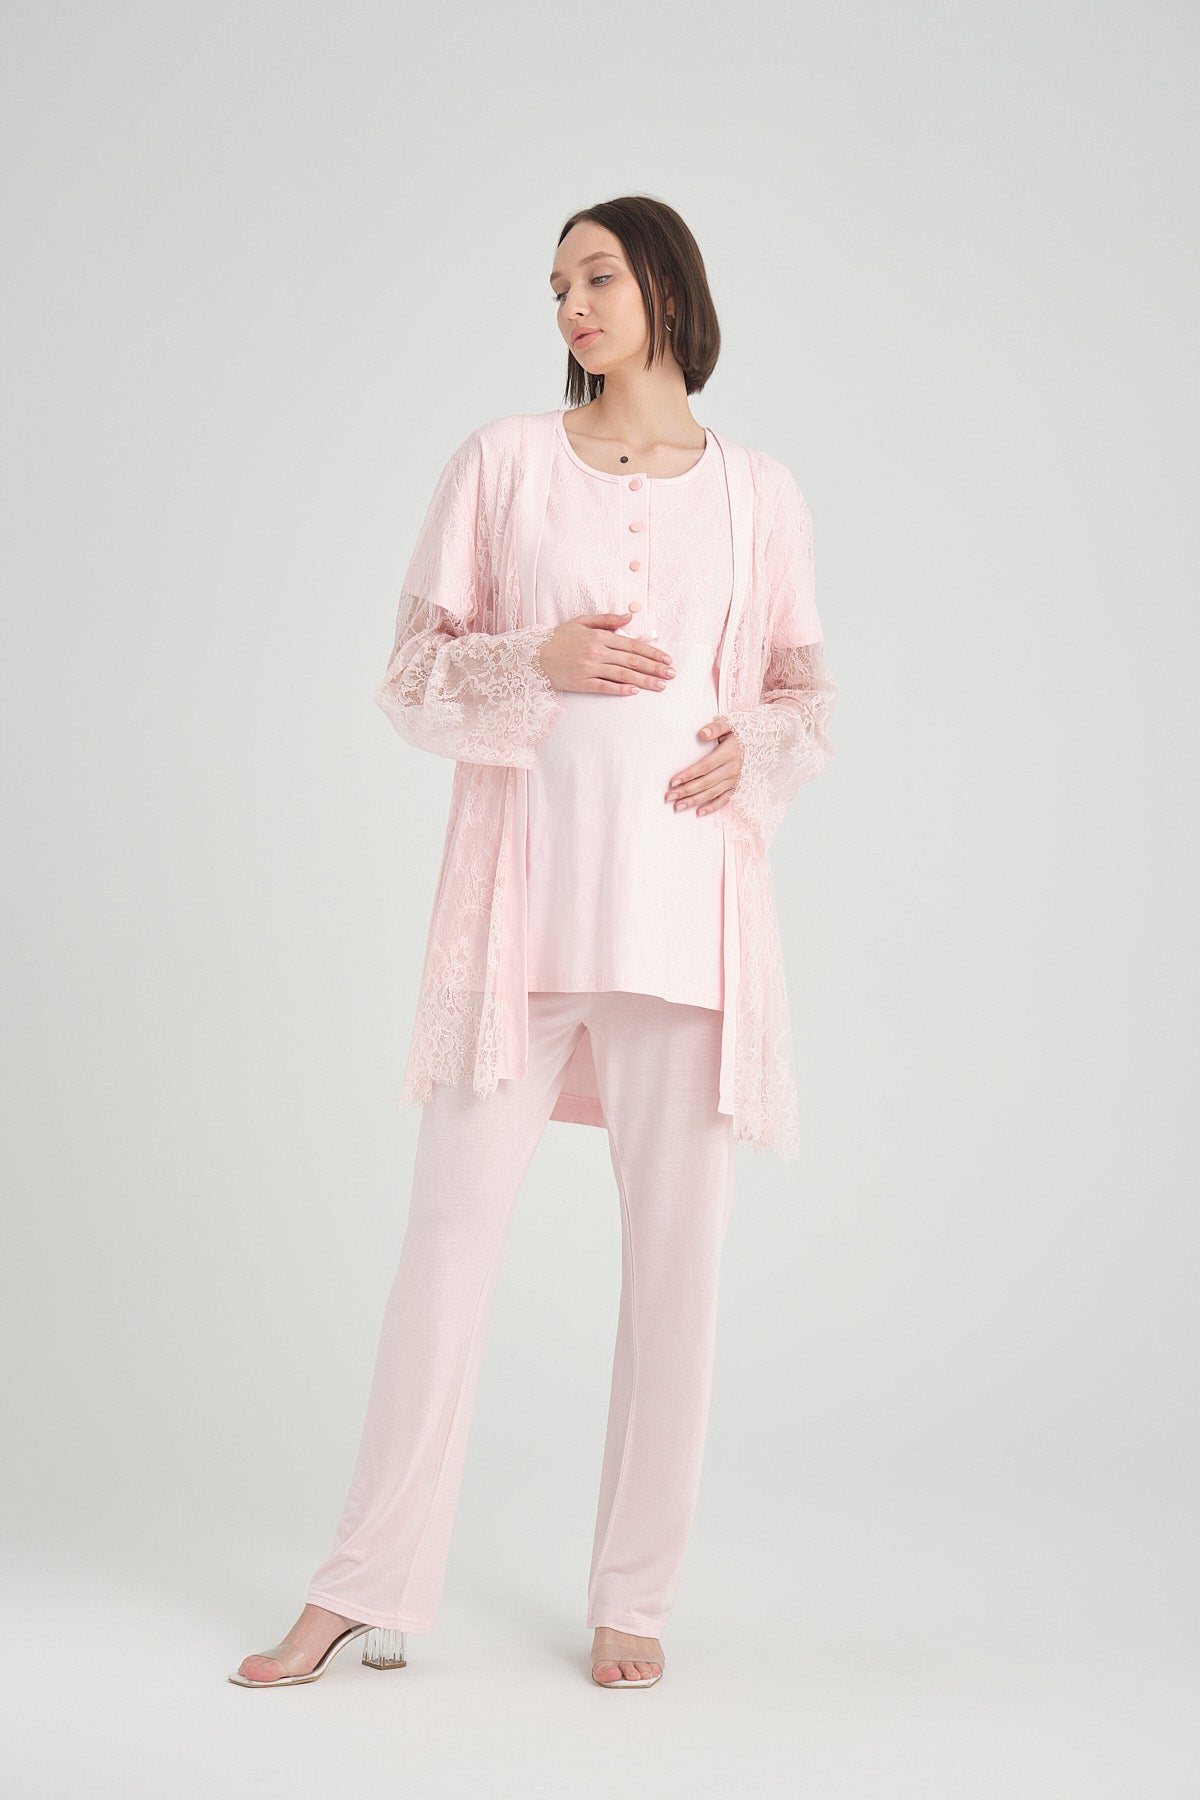 Lace Detailed 3-Pieces Maternity & Nursing Pajamas With Robe Pink - 2370